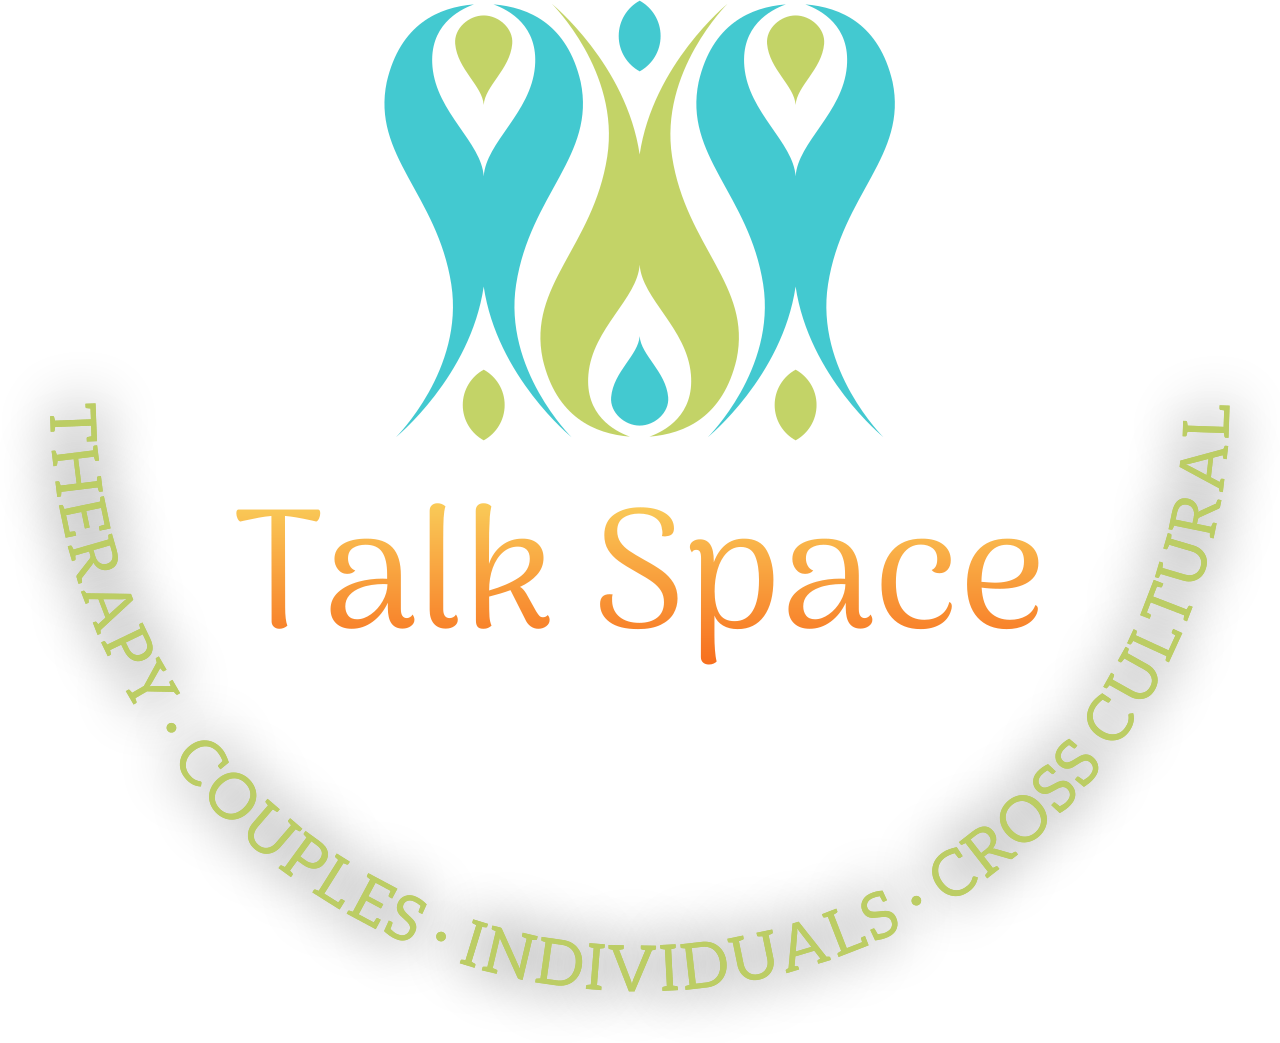 Talk Space's logo